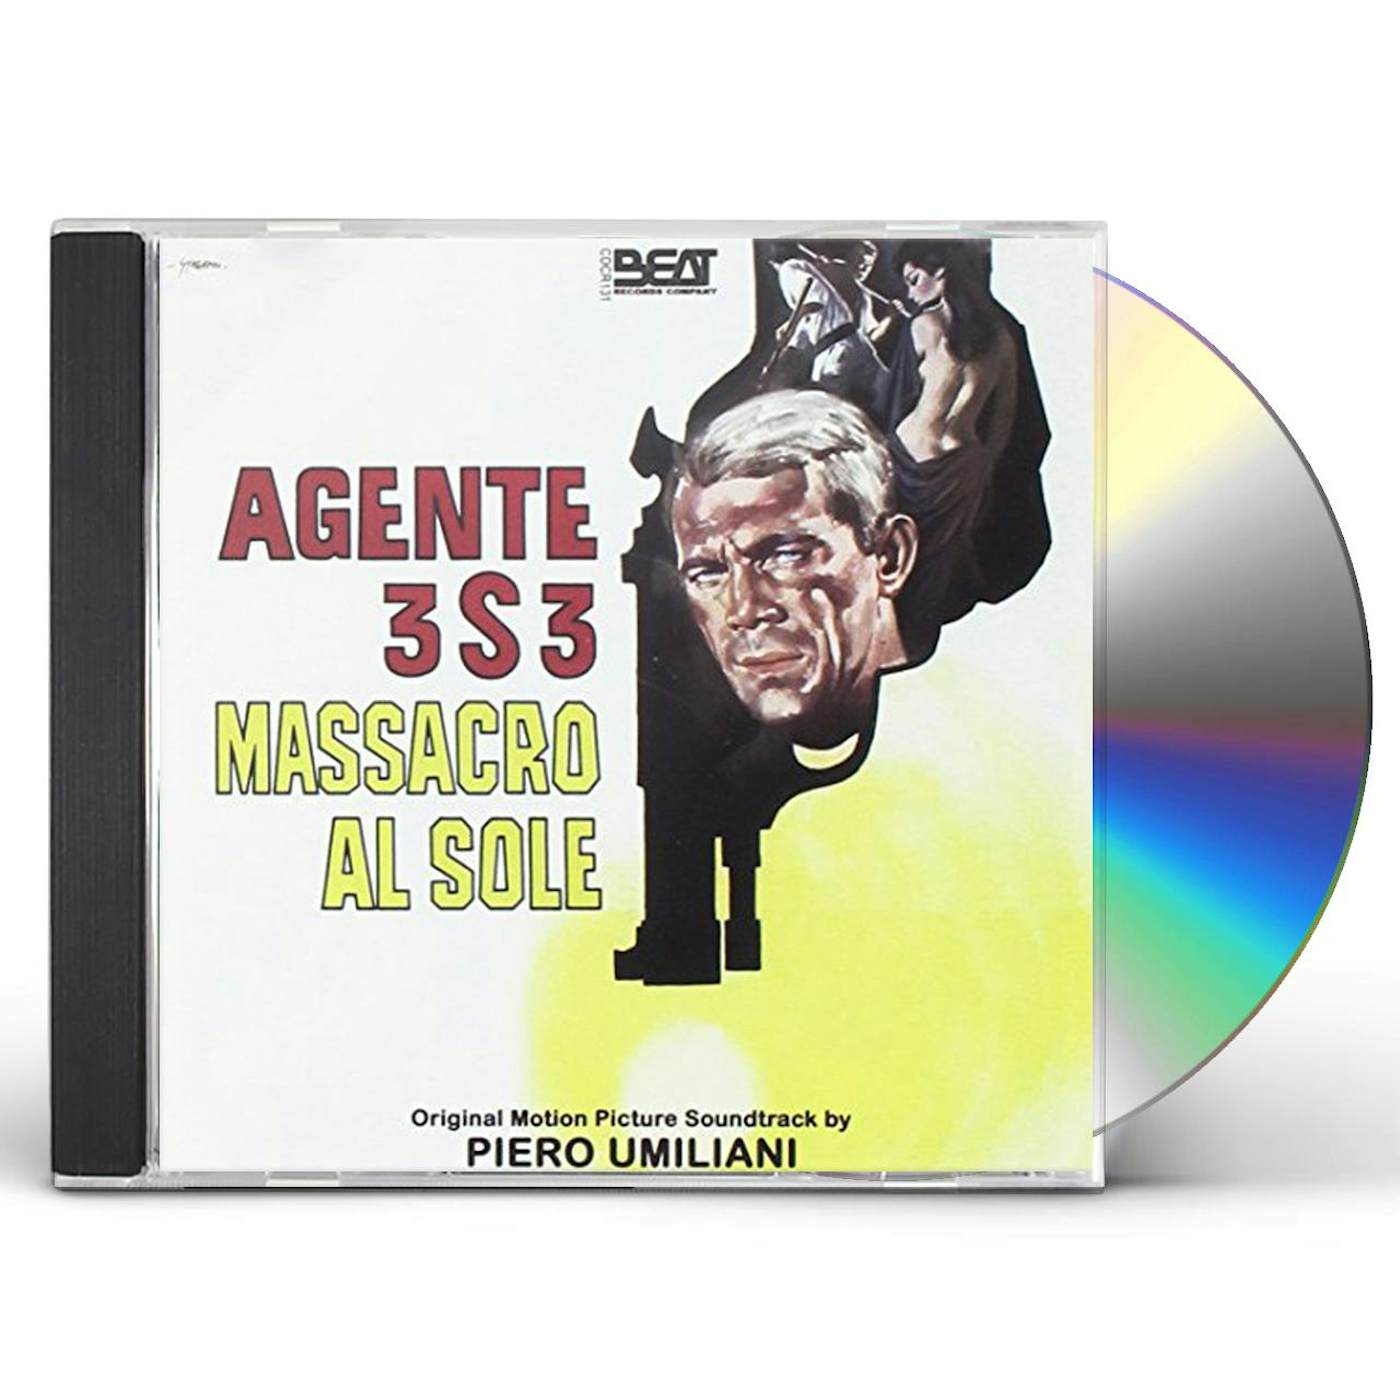 Piero Umiliani AGENTE 3S3 MASSACRO AL SOLE / Original Soundtrack CD